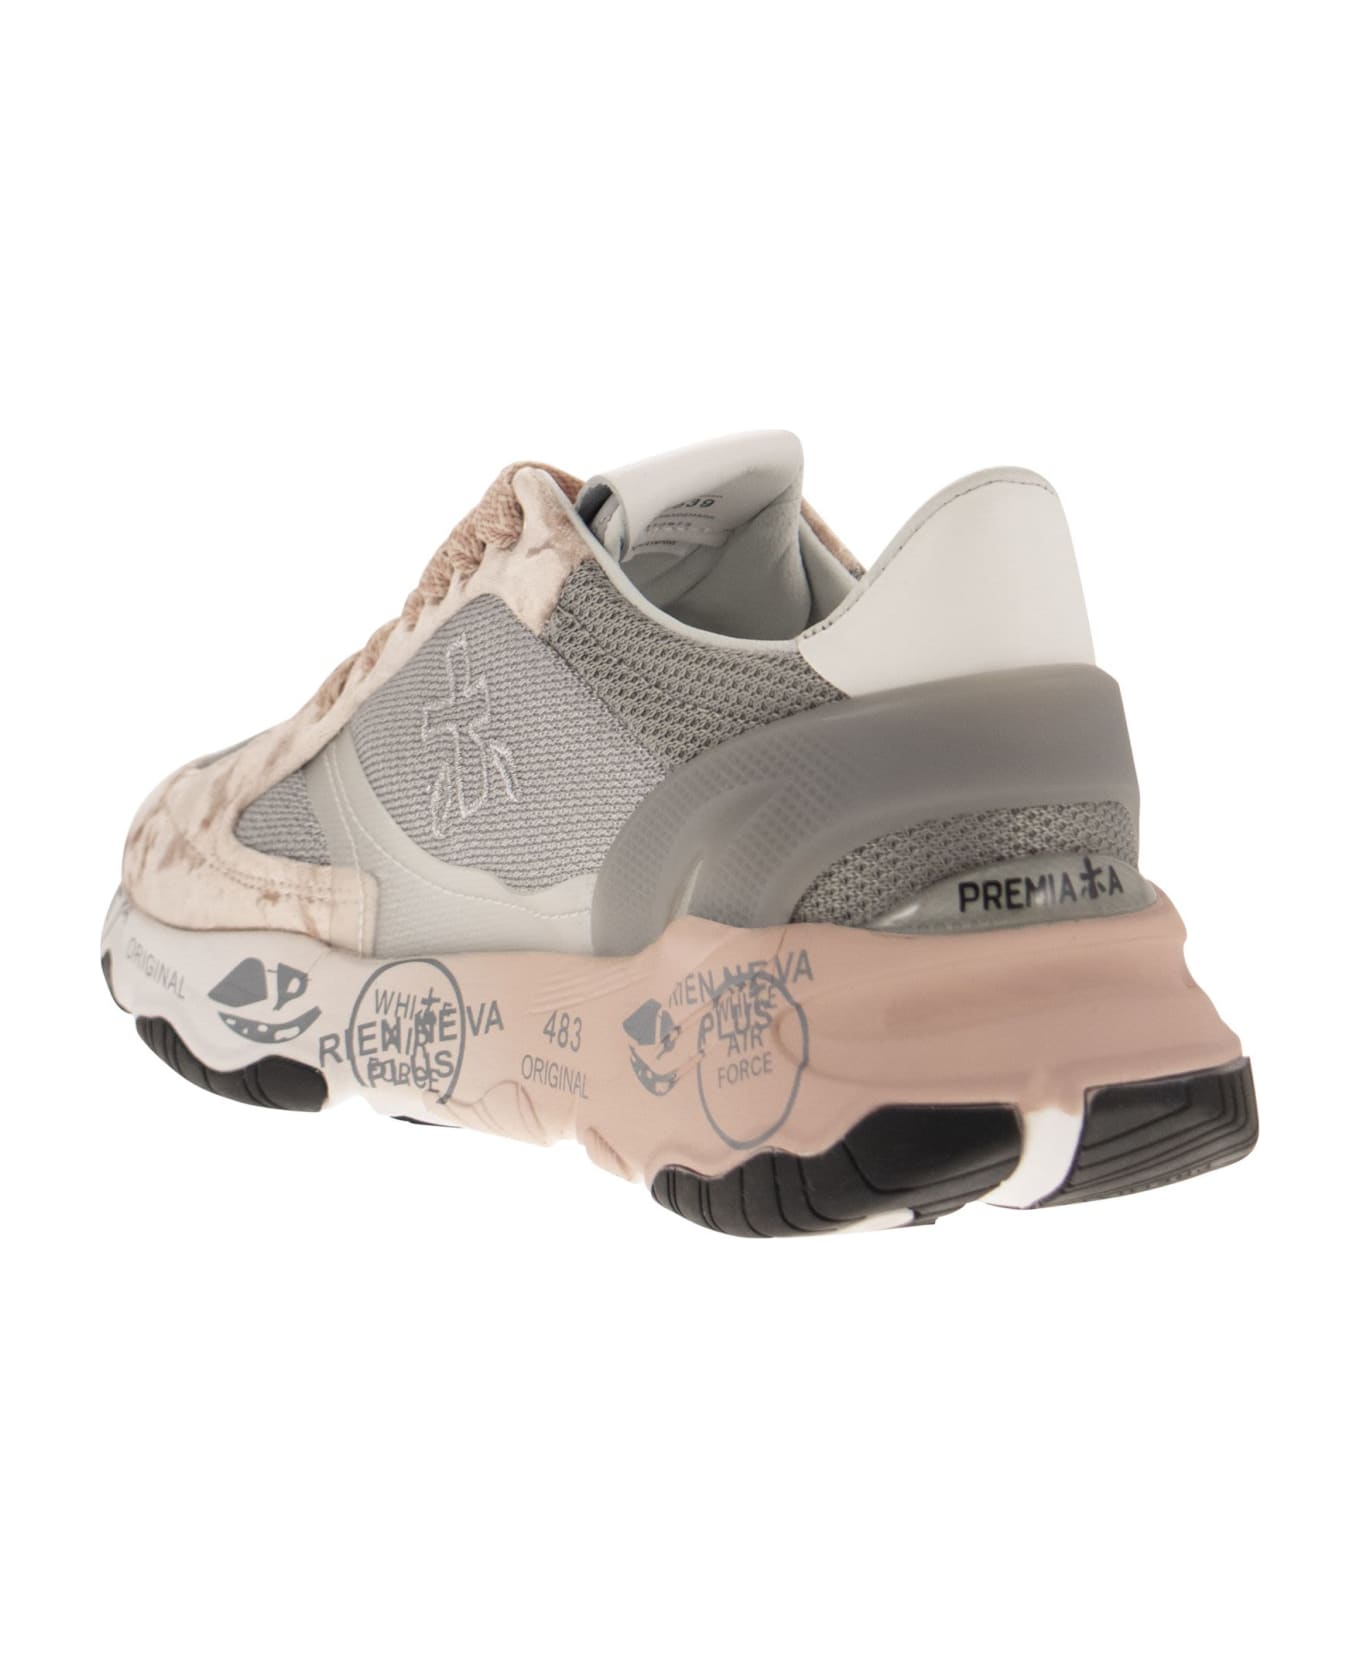 Premiata Buffly Sneakers - Pink/grey